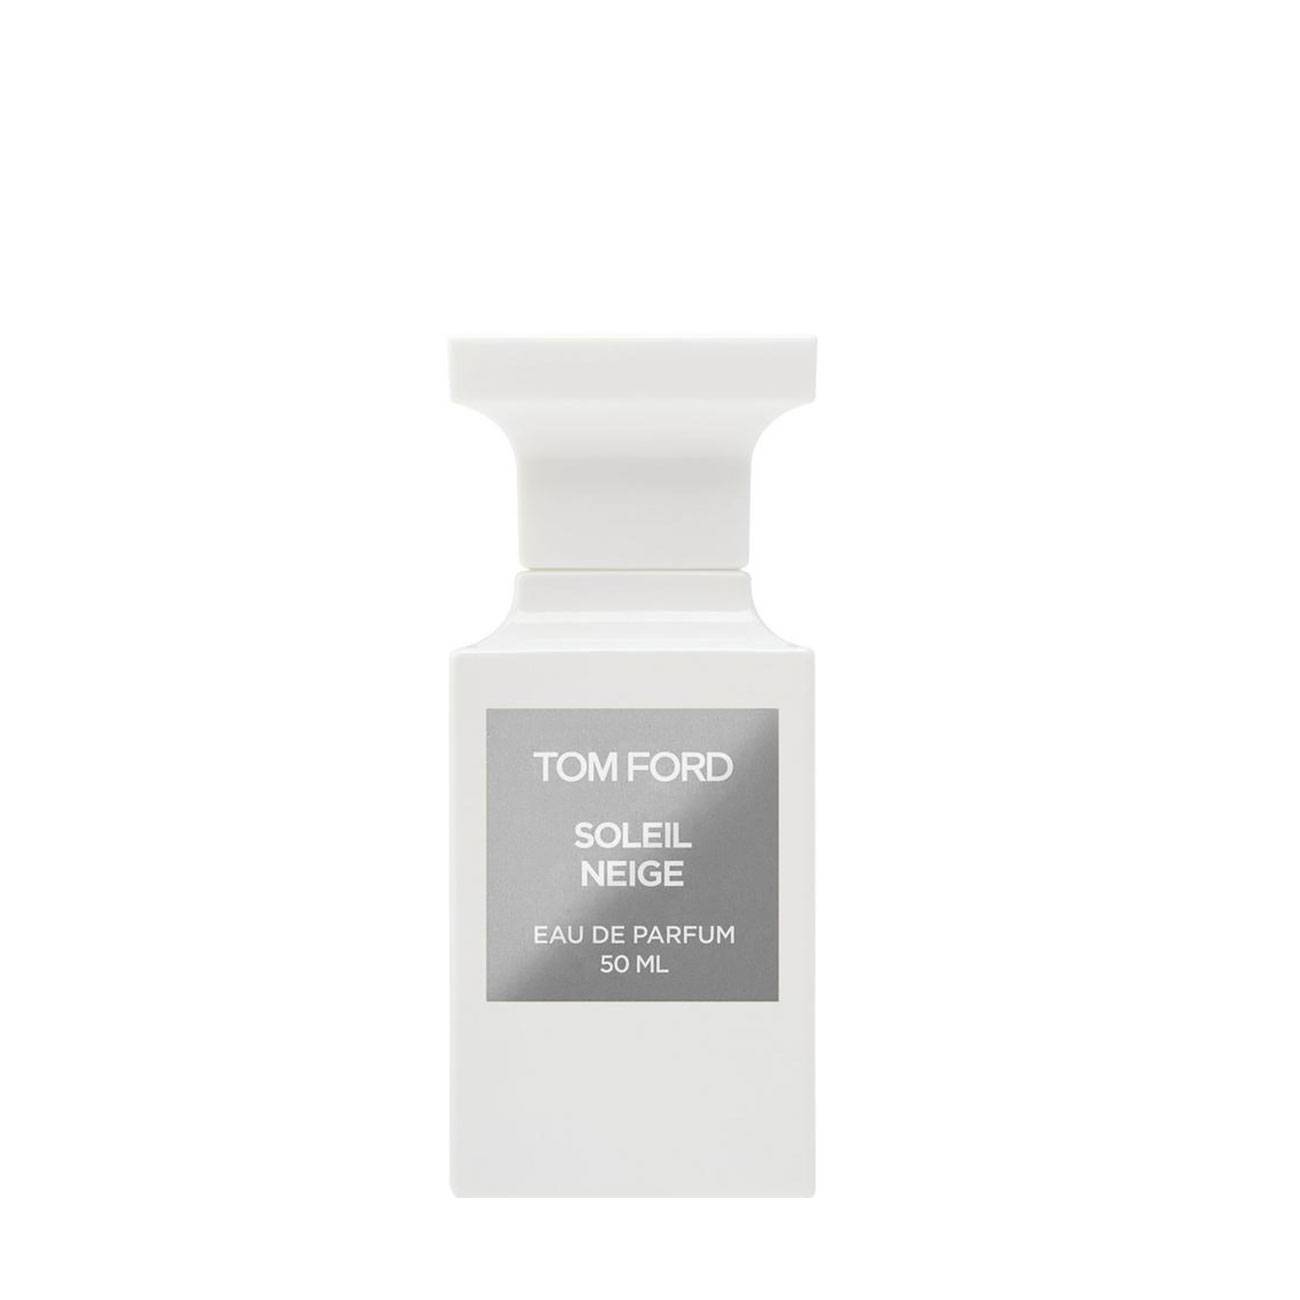 Parfum de niche Tom Ford SOLEIL NEIGE 50ml cu comanda online